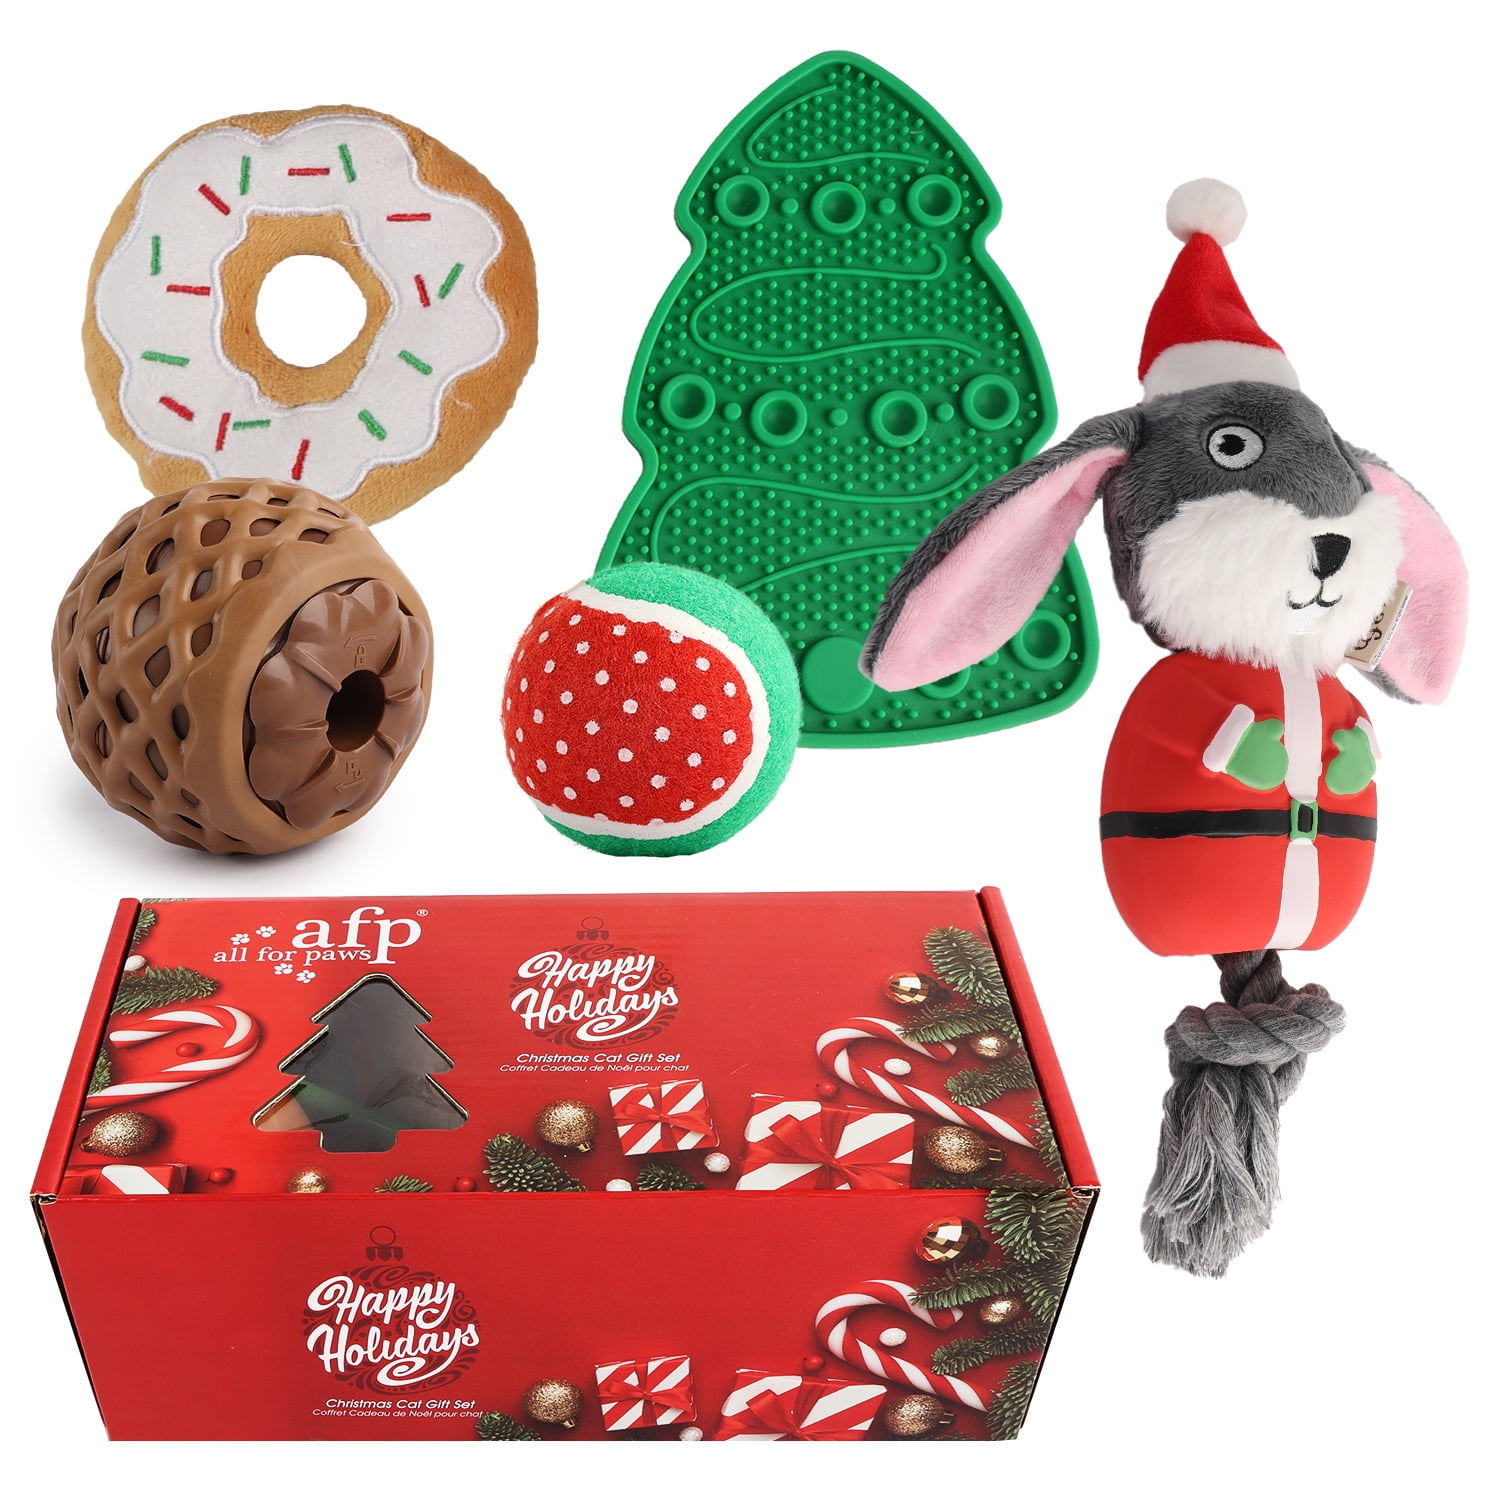 PAWZ Road Special Christmas Fun Dog Toys Gift Boxes